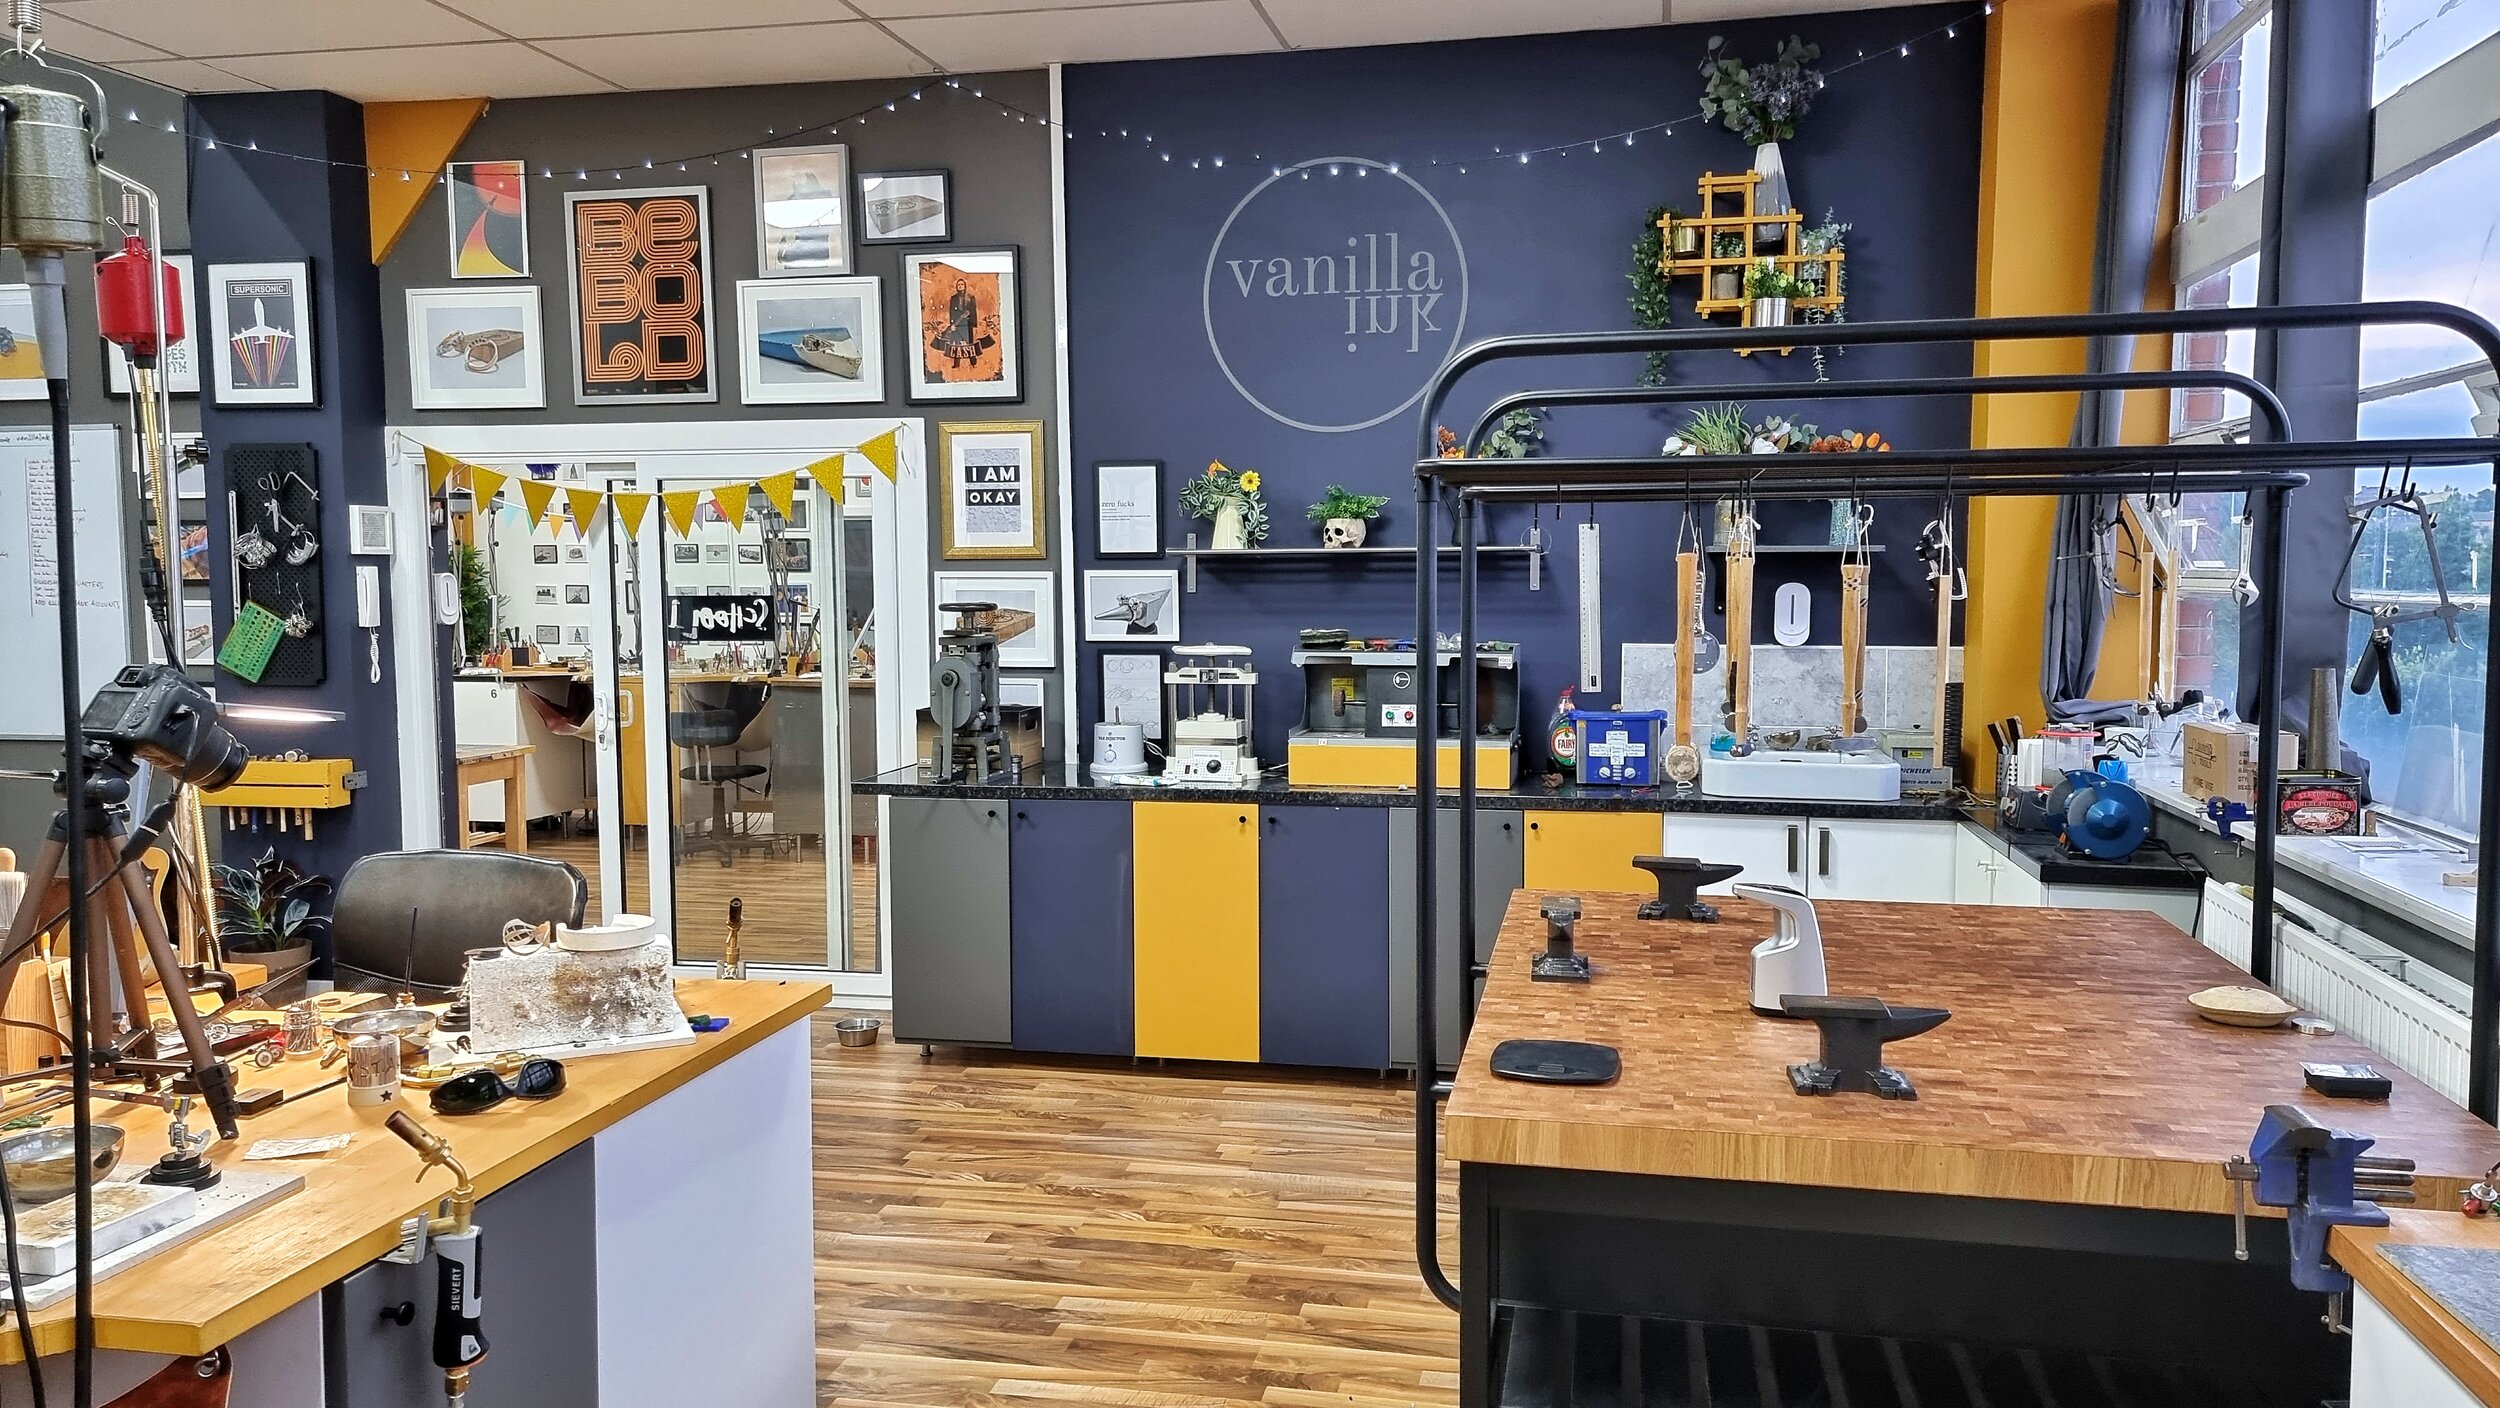 Jewellery school Vanilla Ink CIC receives £45,000 funding boost from SIS